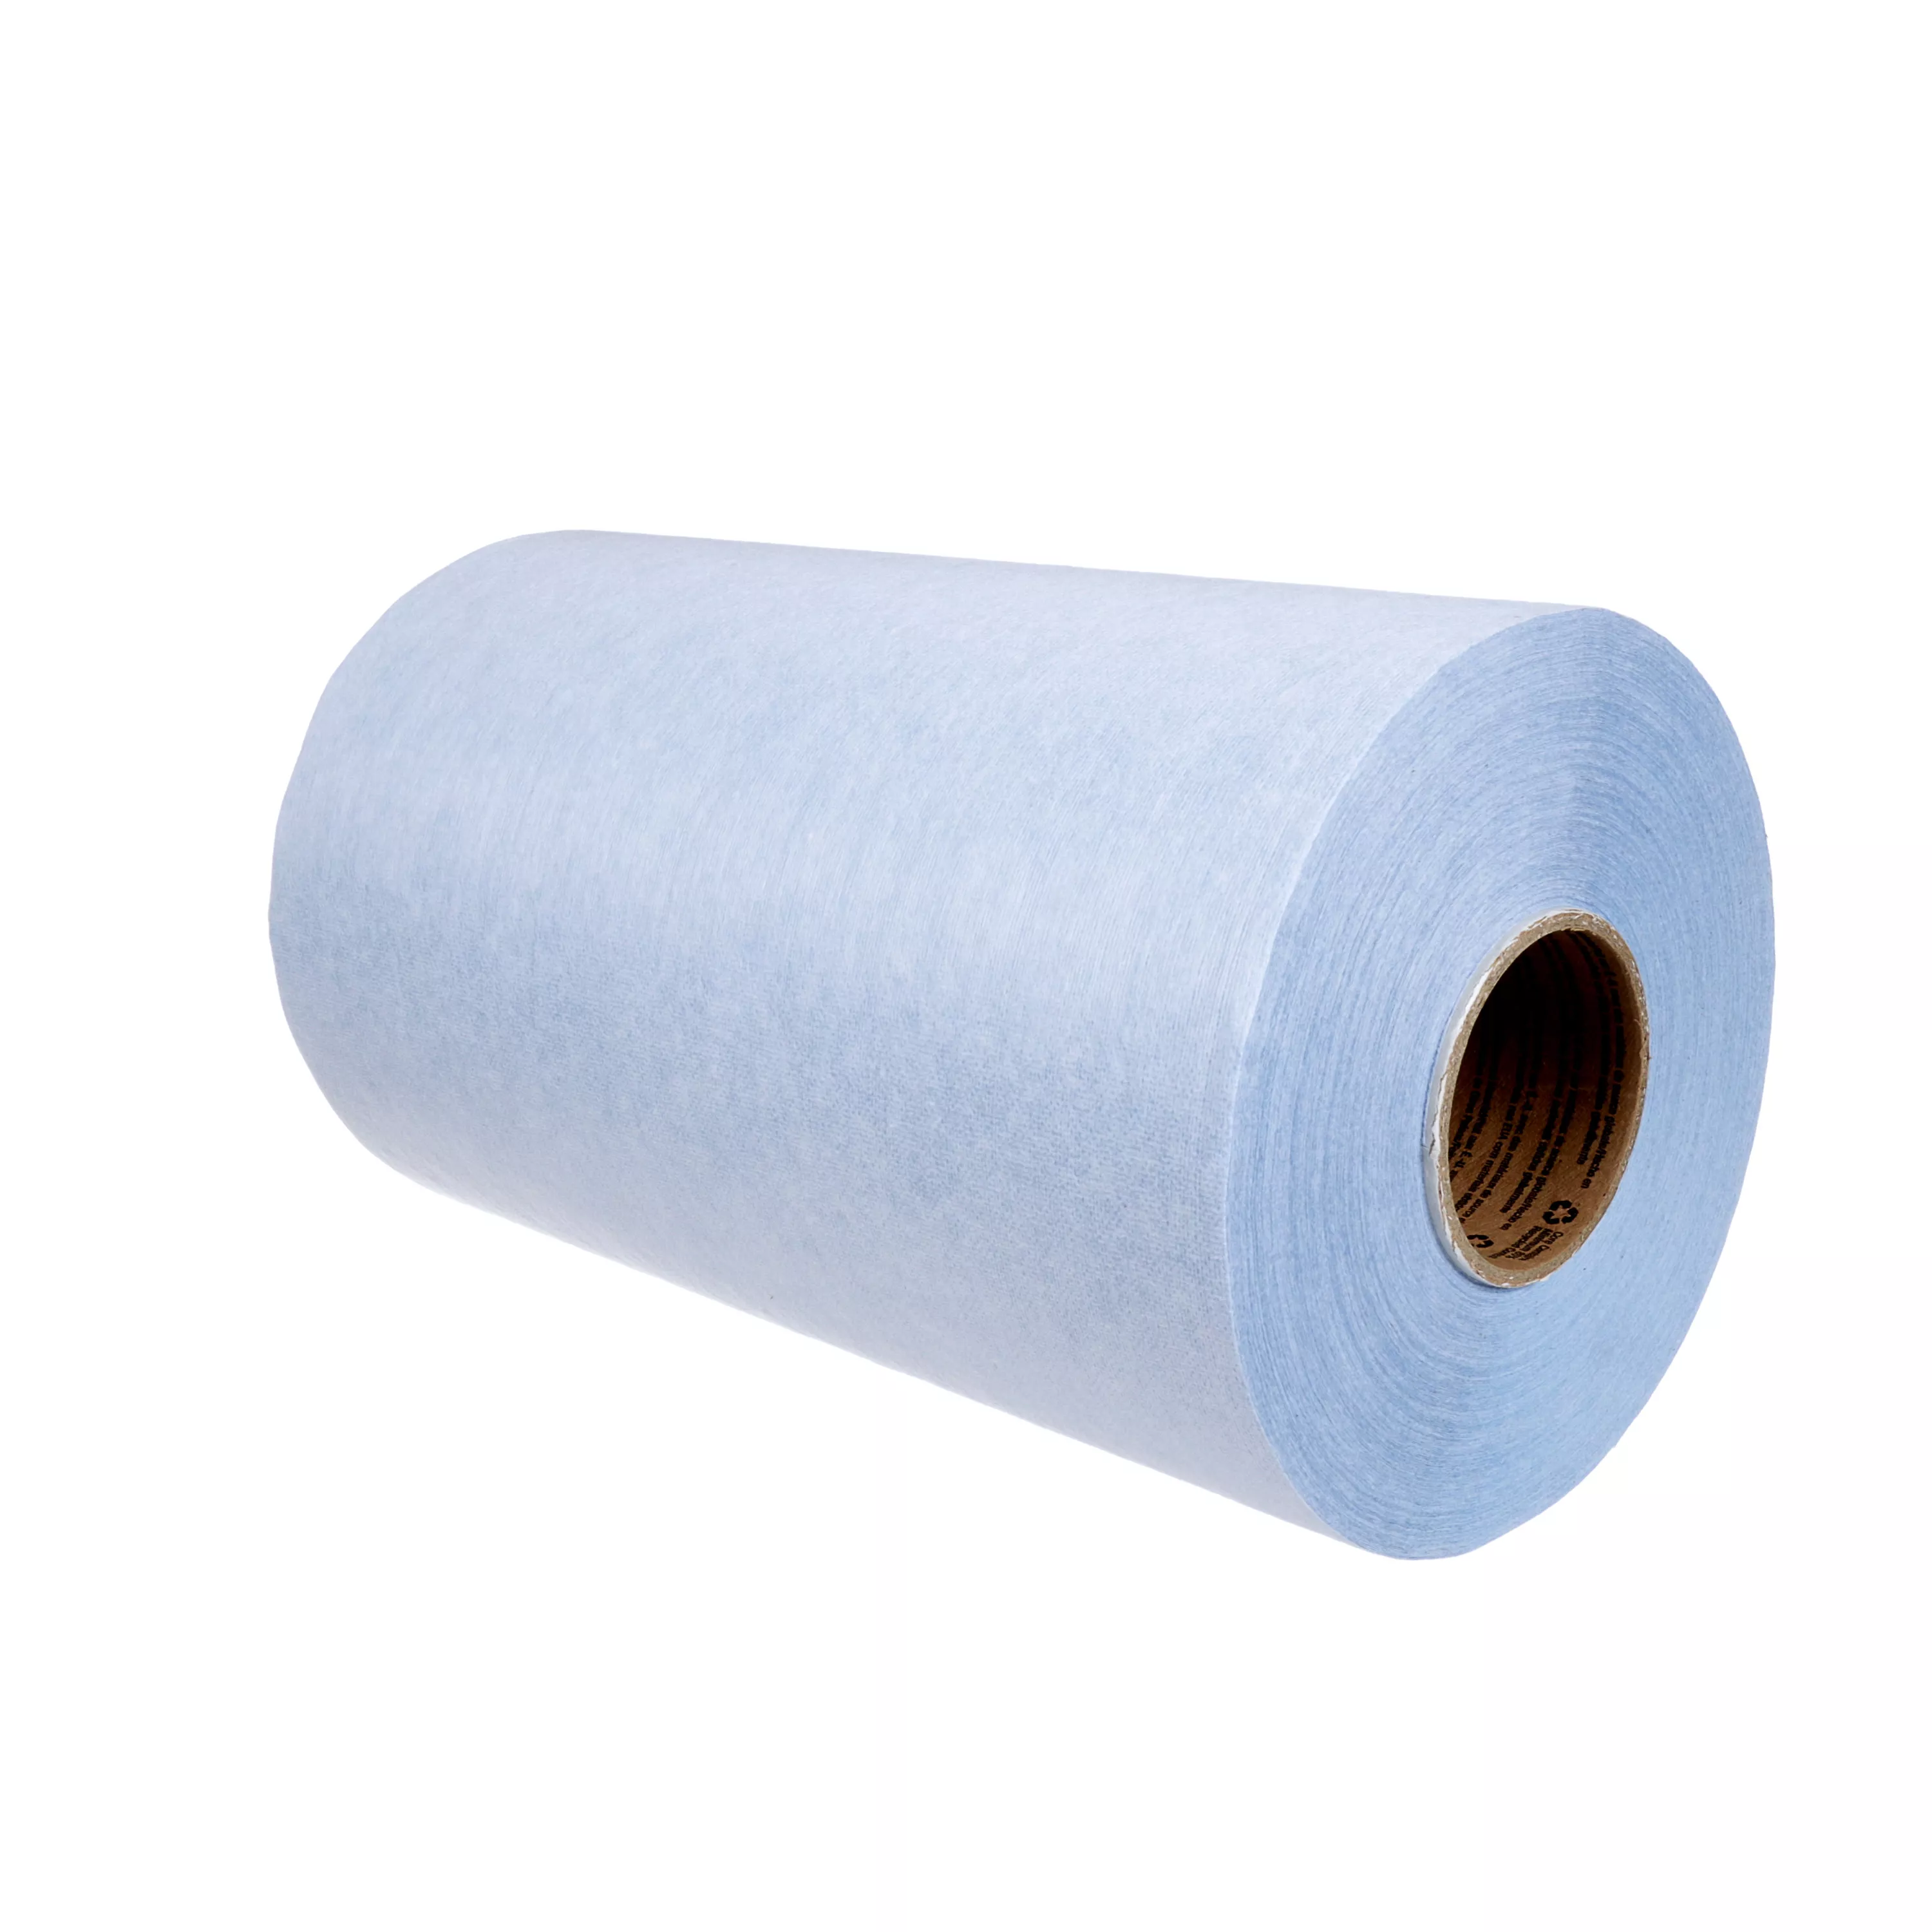 SKU 7100169505 | 3M™ Self-Stick Liquid Protection Fabric